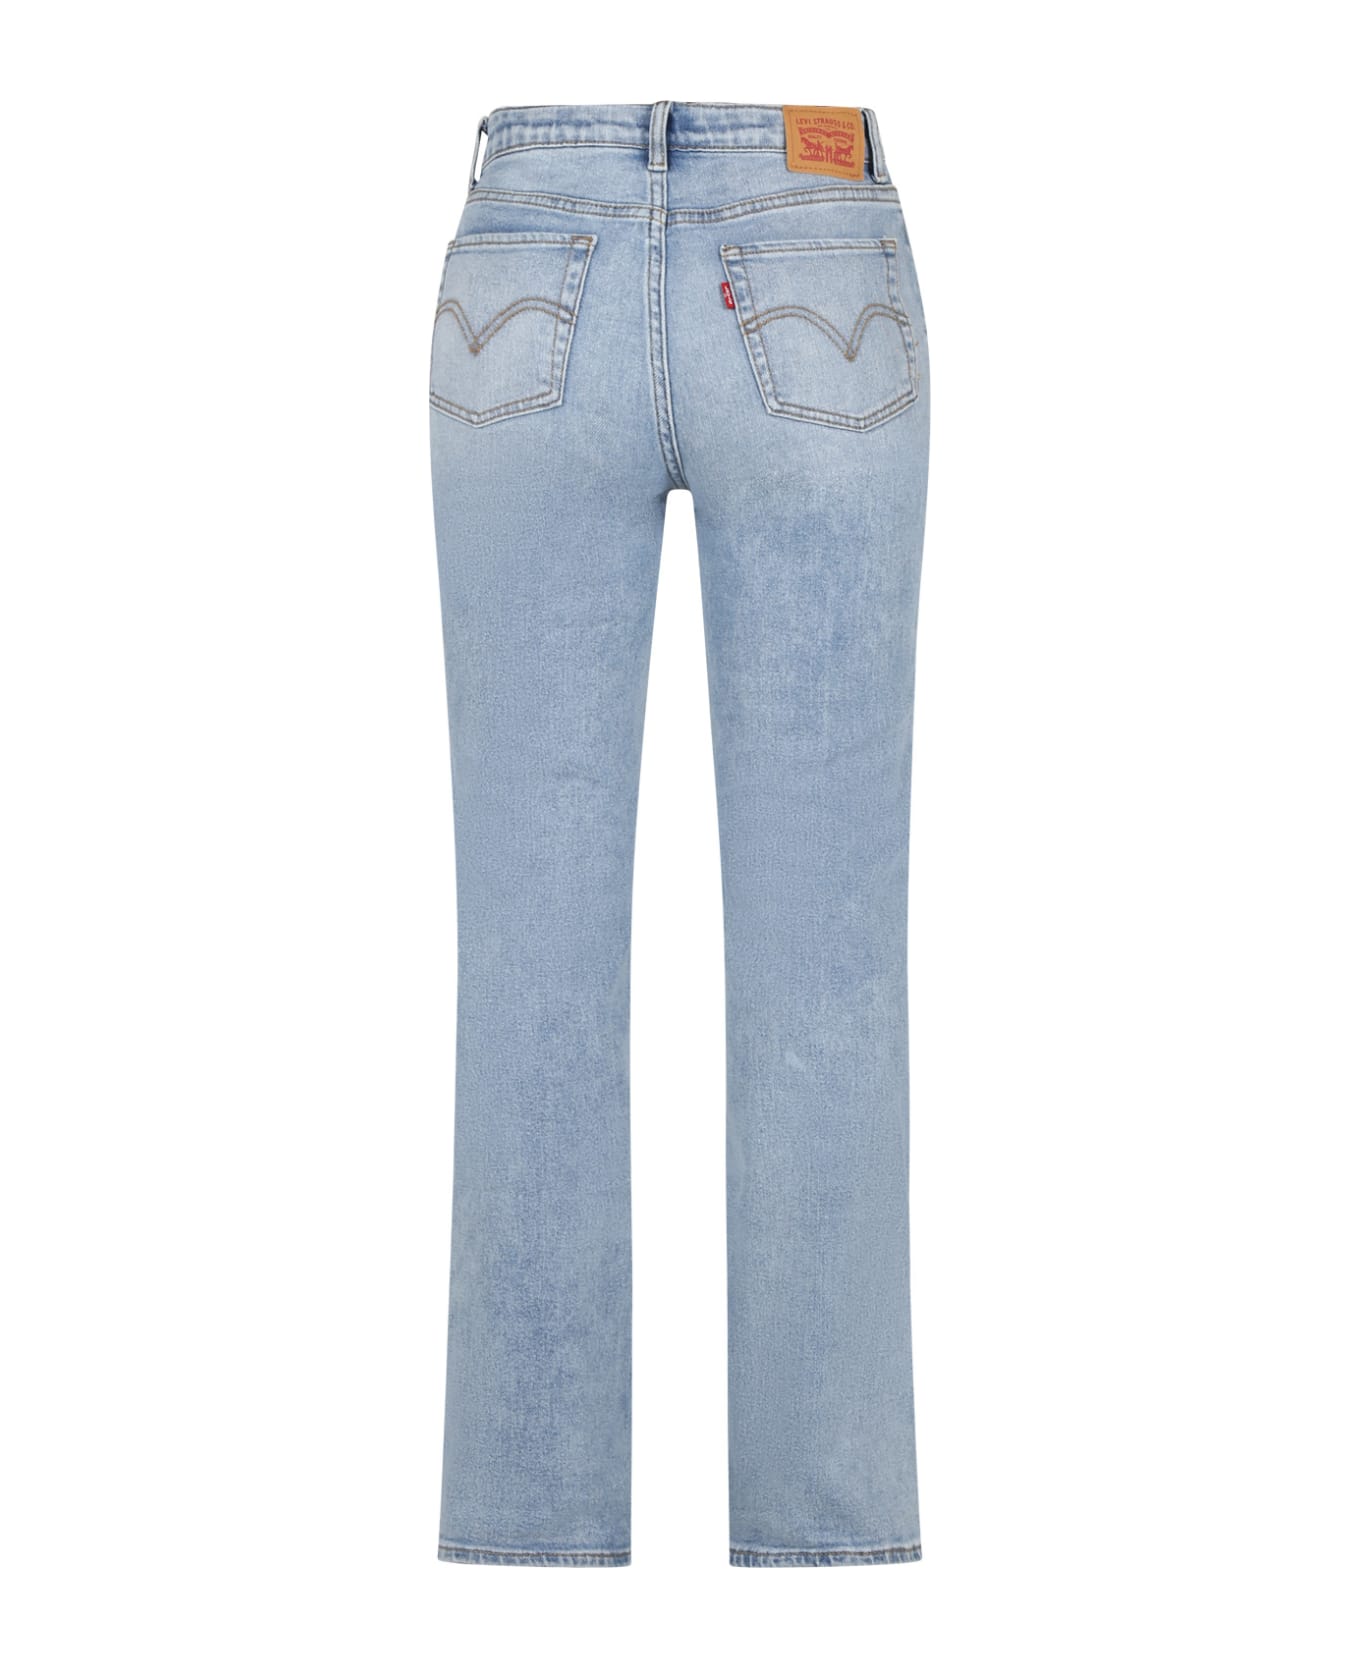 Levi's Denim Jeans For Girl - Denim